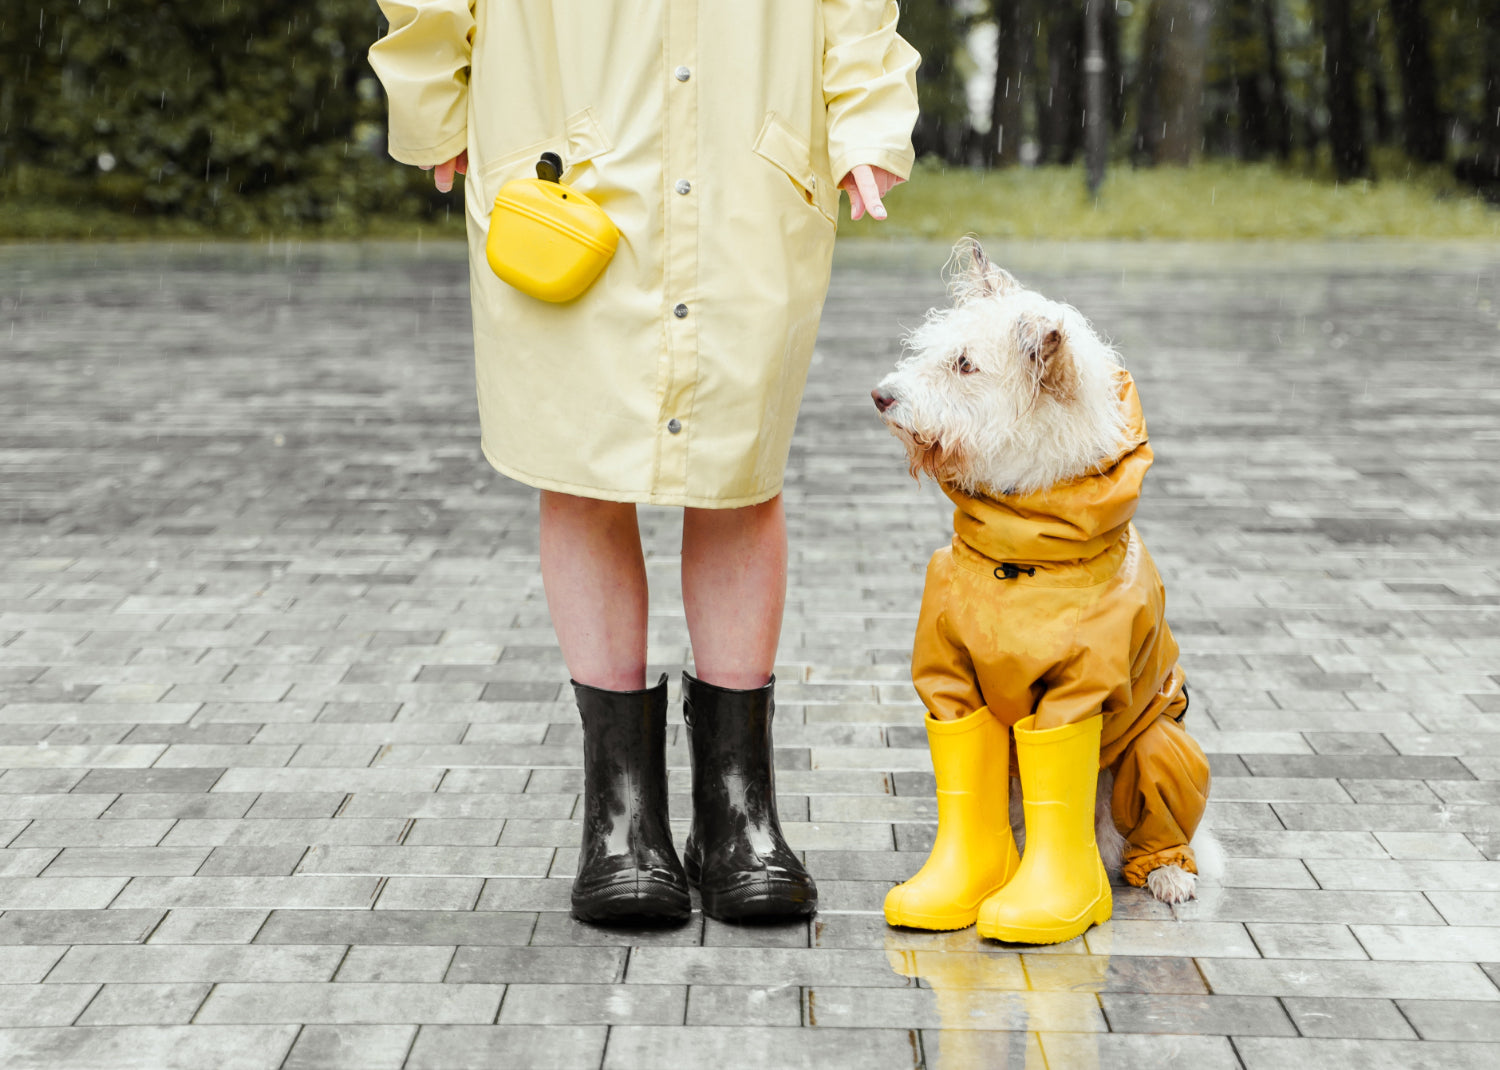 A person in a raincoat walks a dog